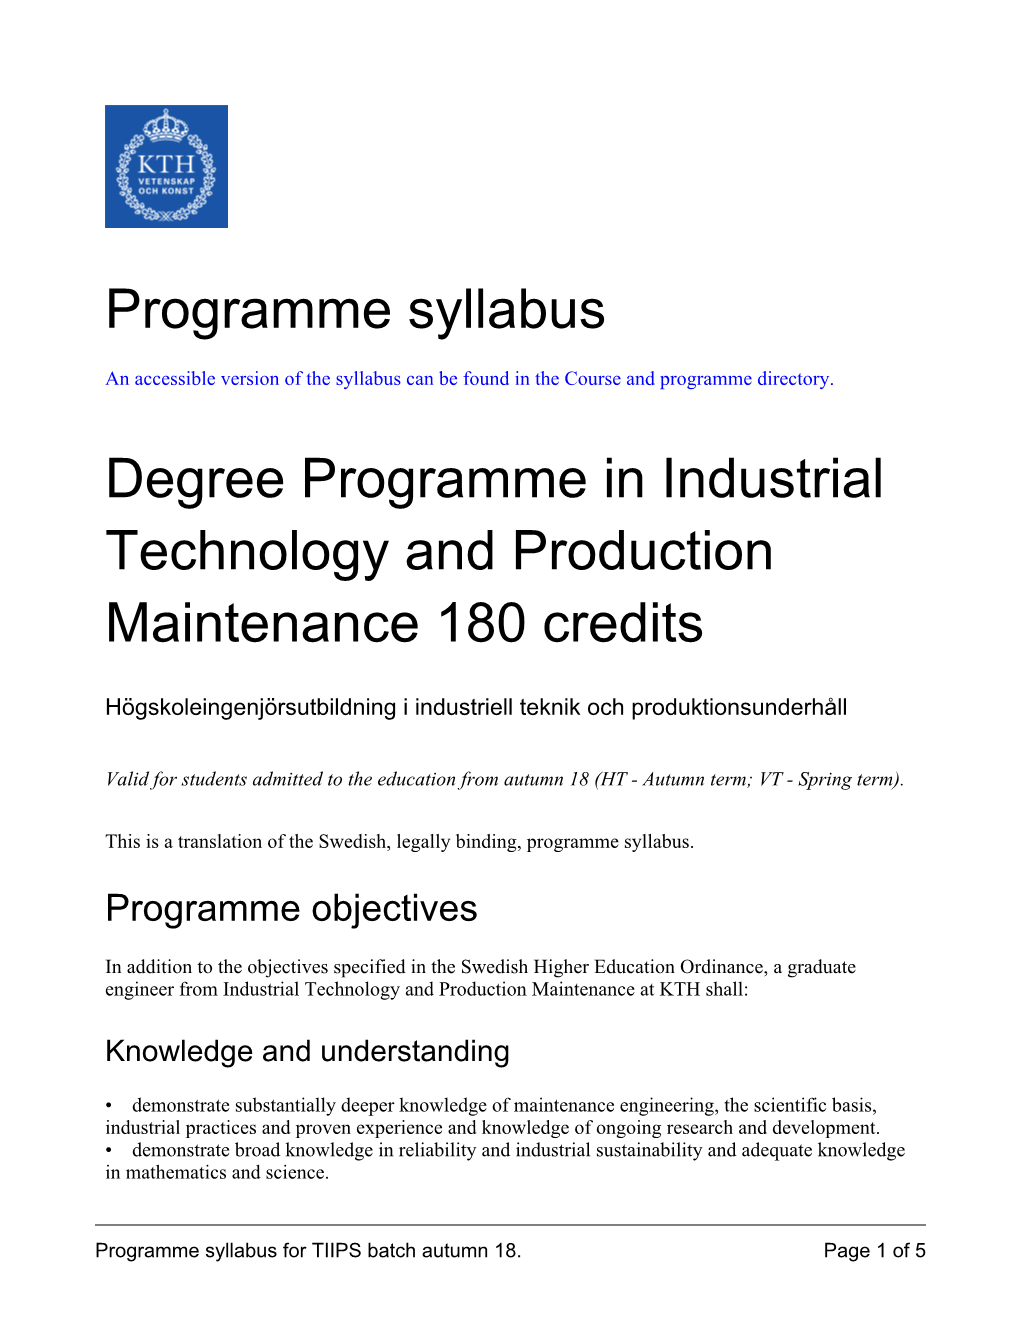 Programme Syllabus Degree Programme in Industrial